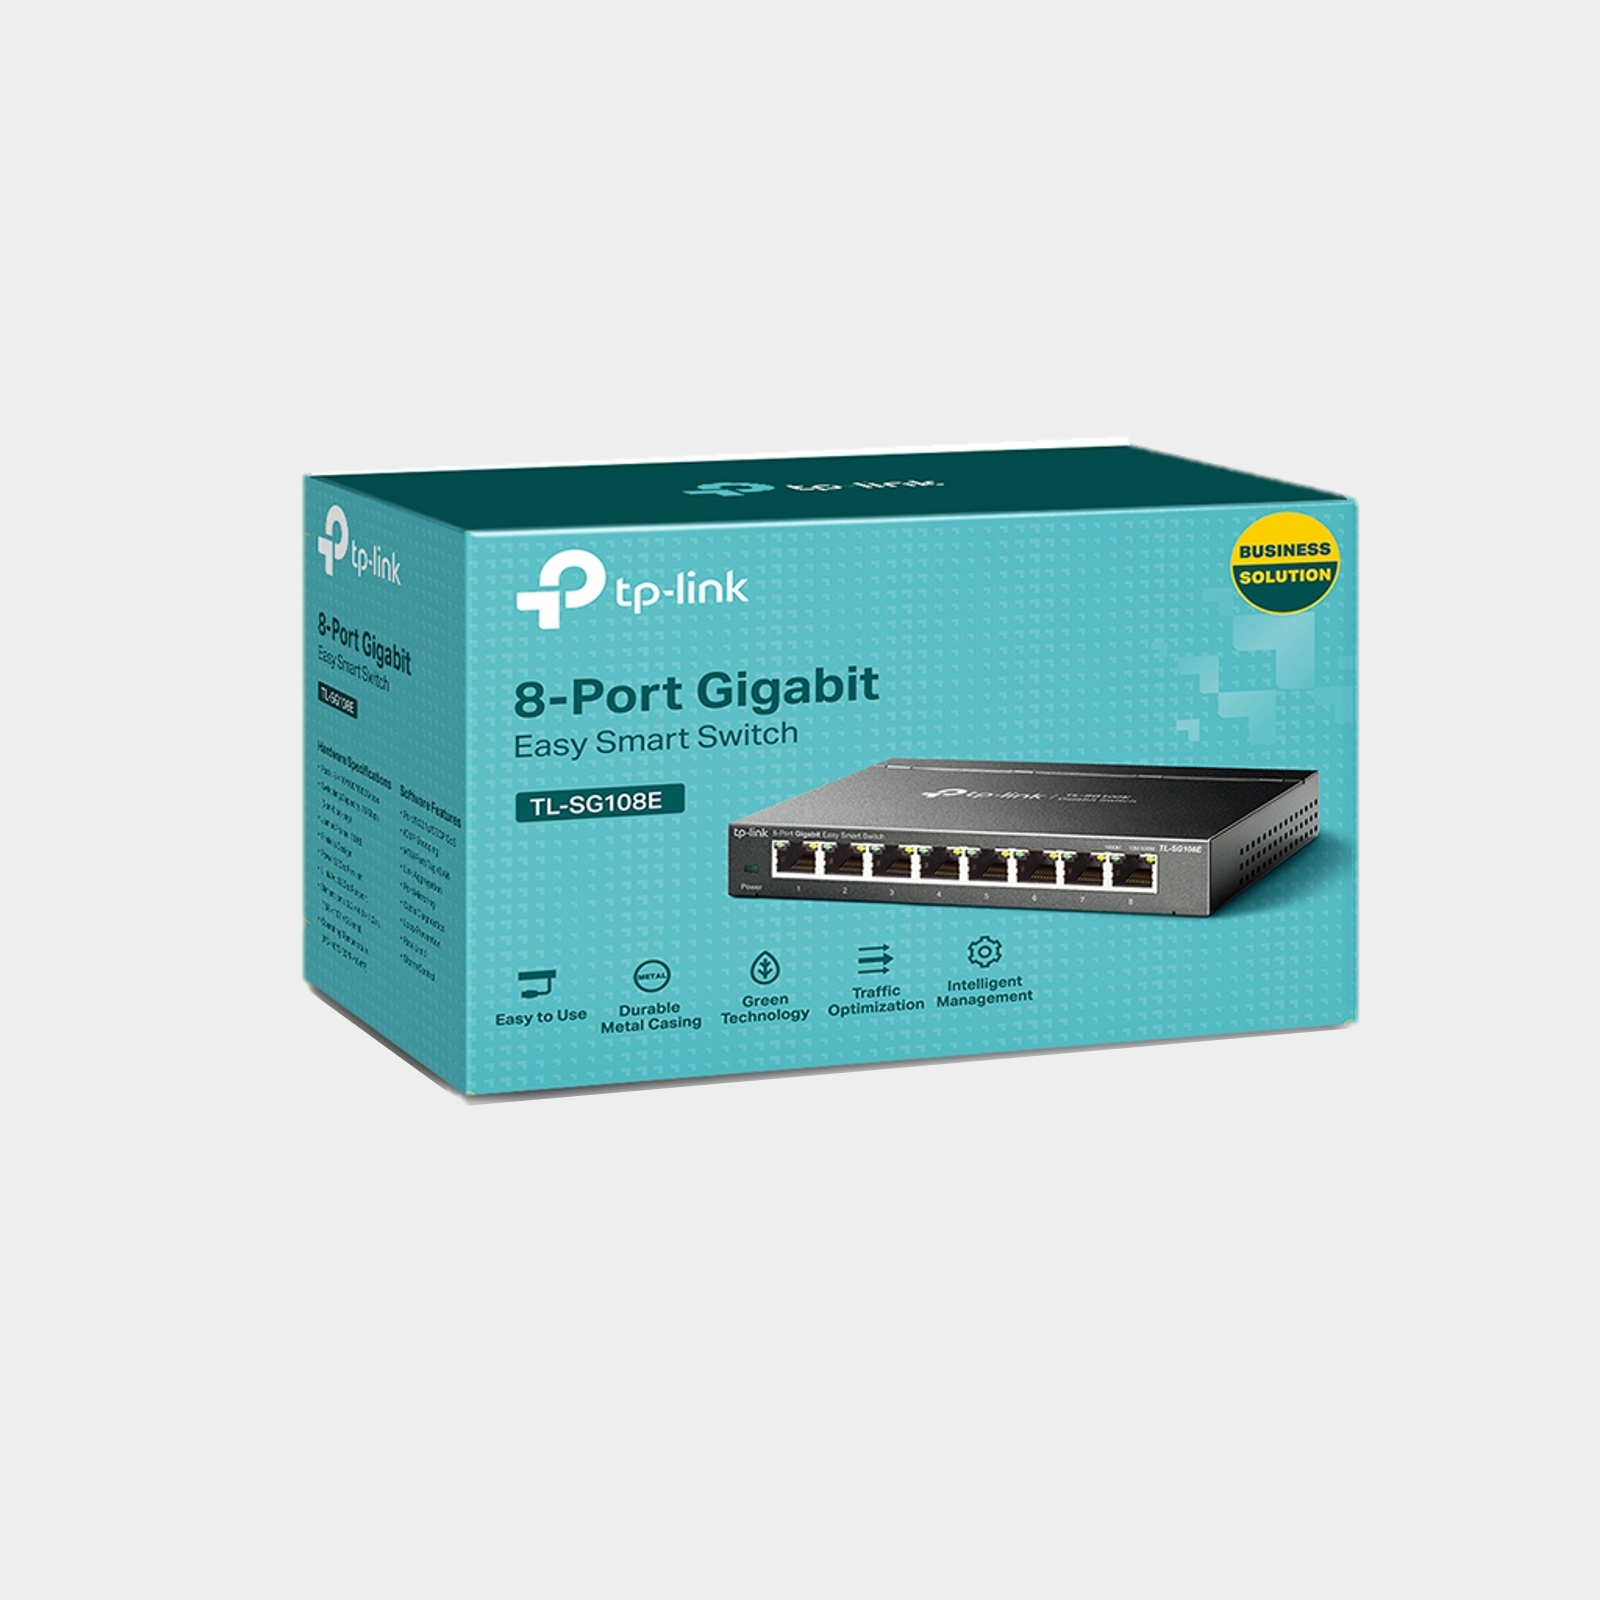 TP-Link 8-Port Gigabit Easy Smart Switch (TL-SG108E)